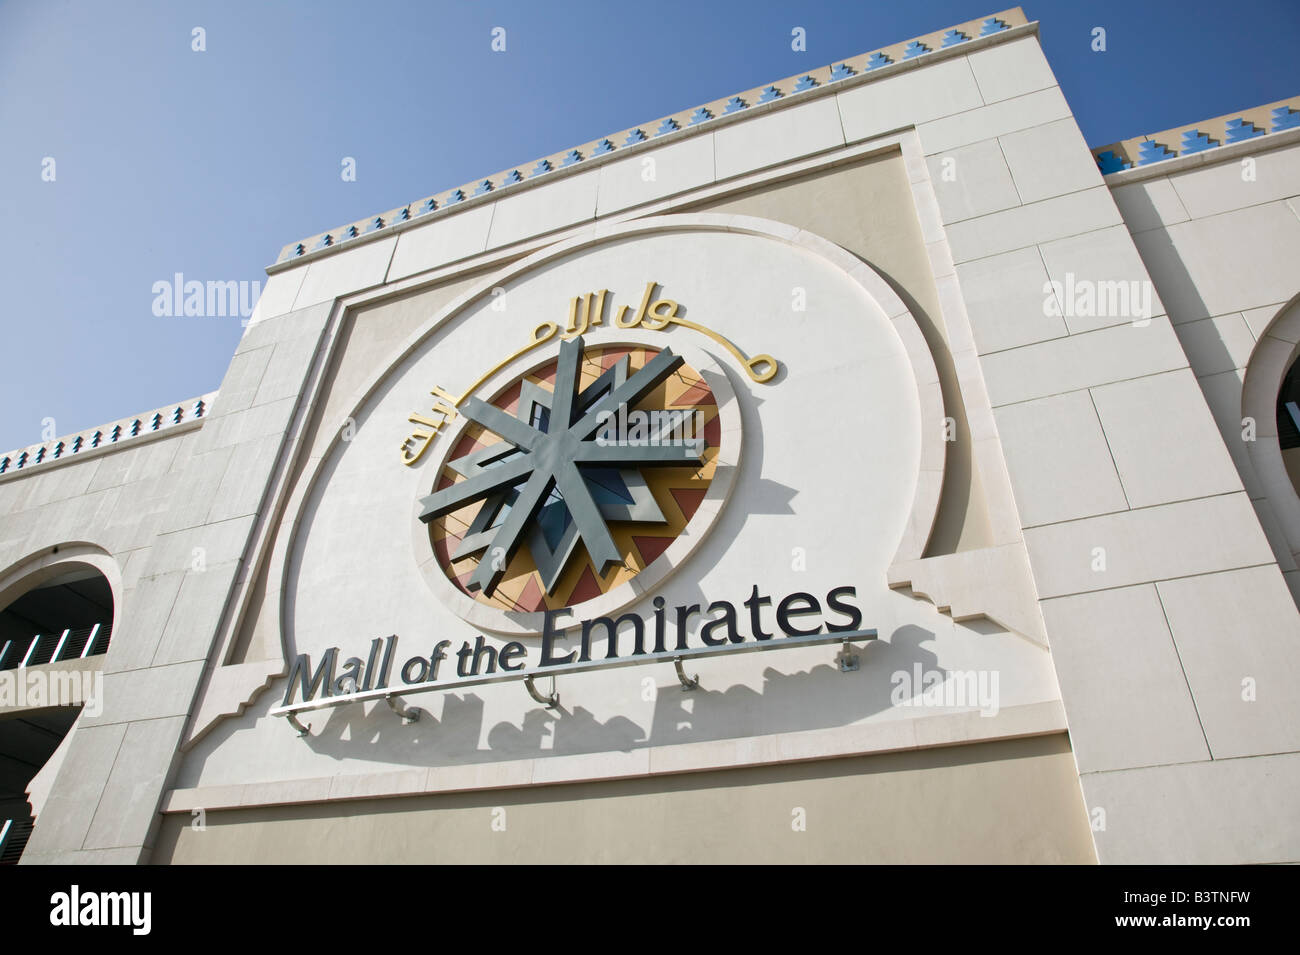 Vereinigte Arabische Emirate, Dubai, Al Soufouh. Mall of Emirates - Werbetafel Stockfoto